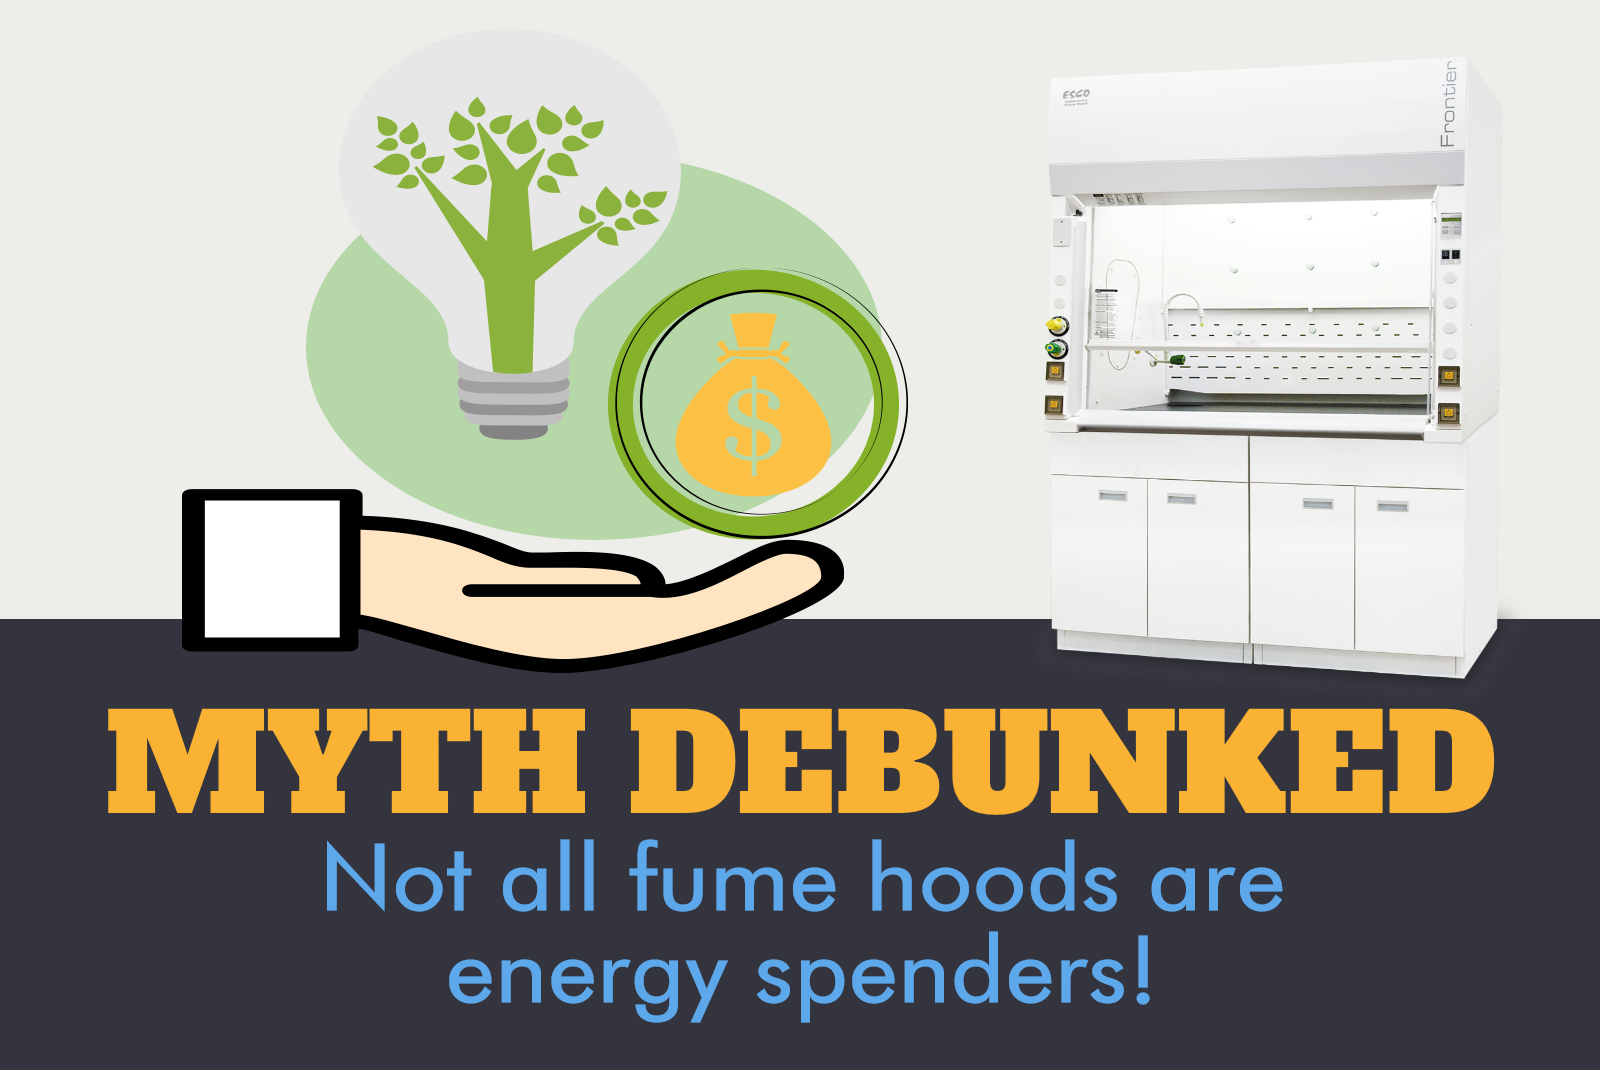 Myth debunked: Not all fume hoods are energy spenders!